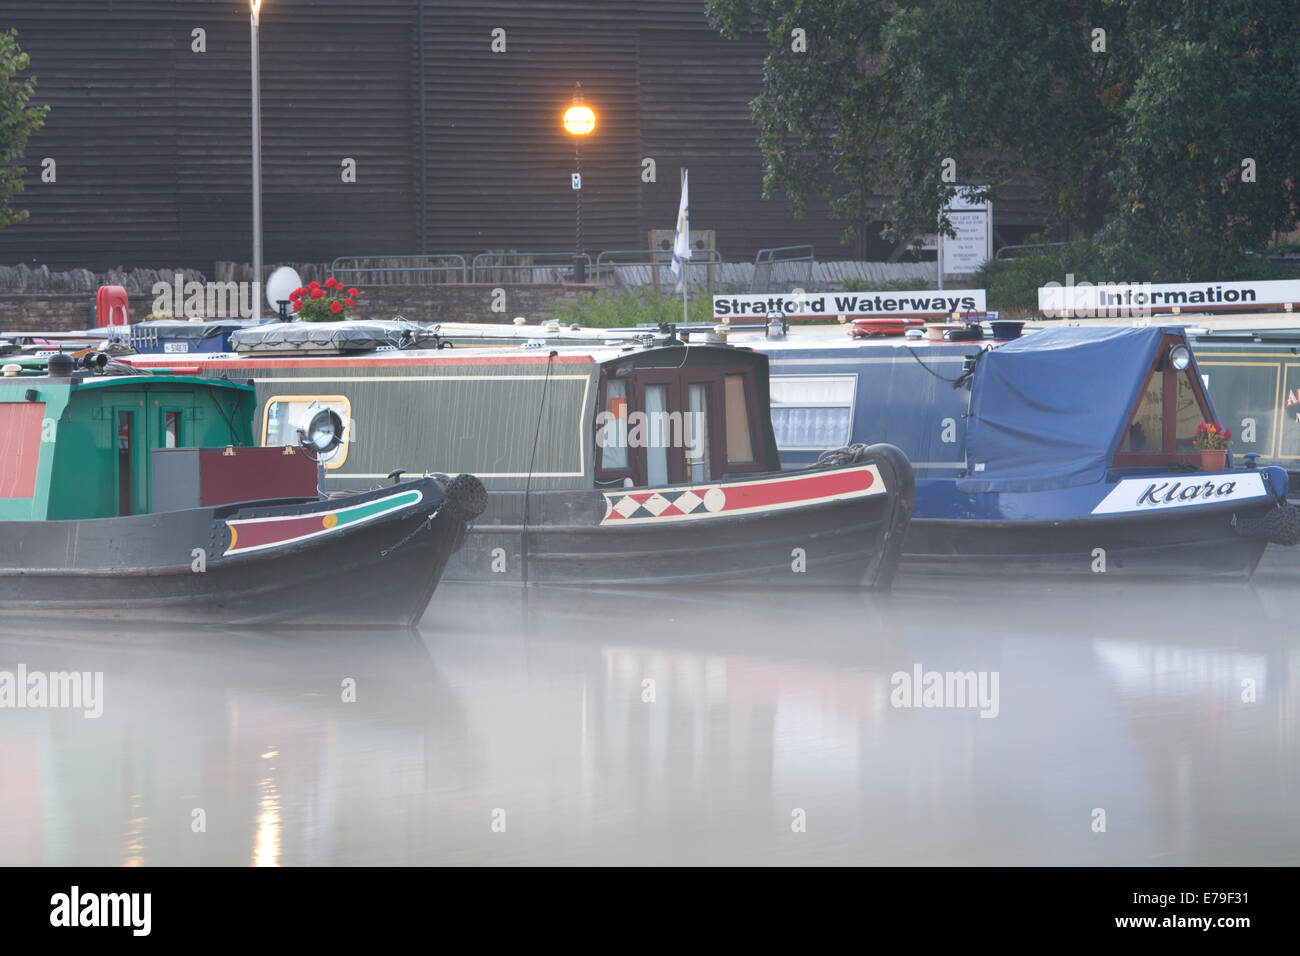 Narrowboats at dawn, misty, Stratford-upon-Avon, UK Stock Photo